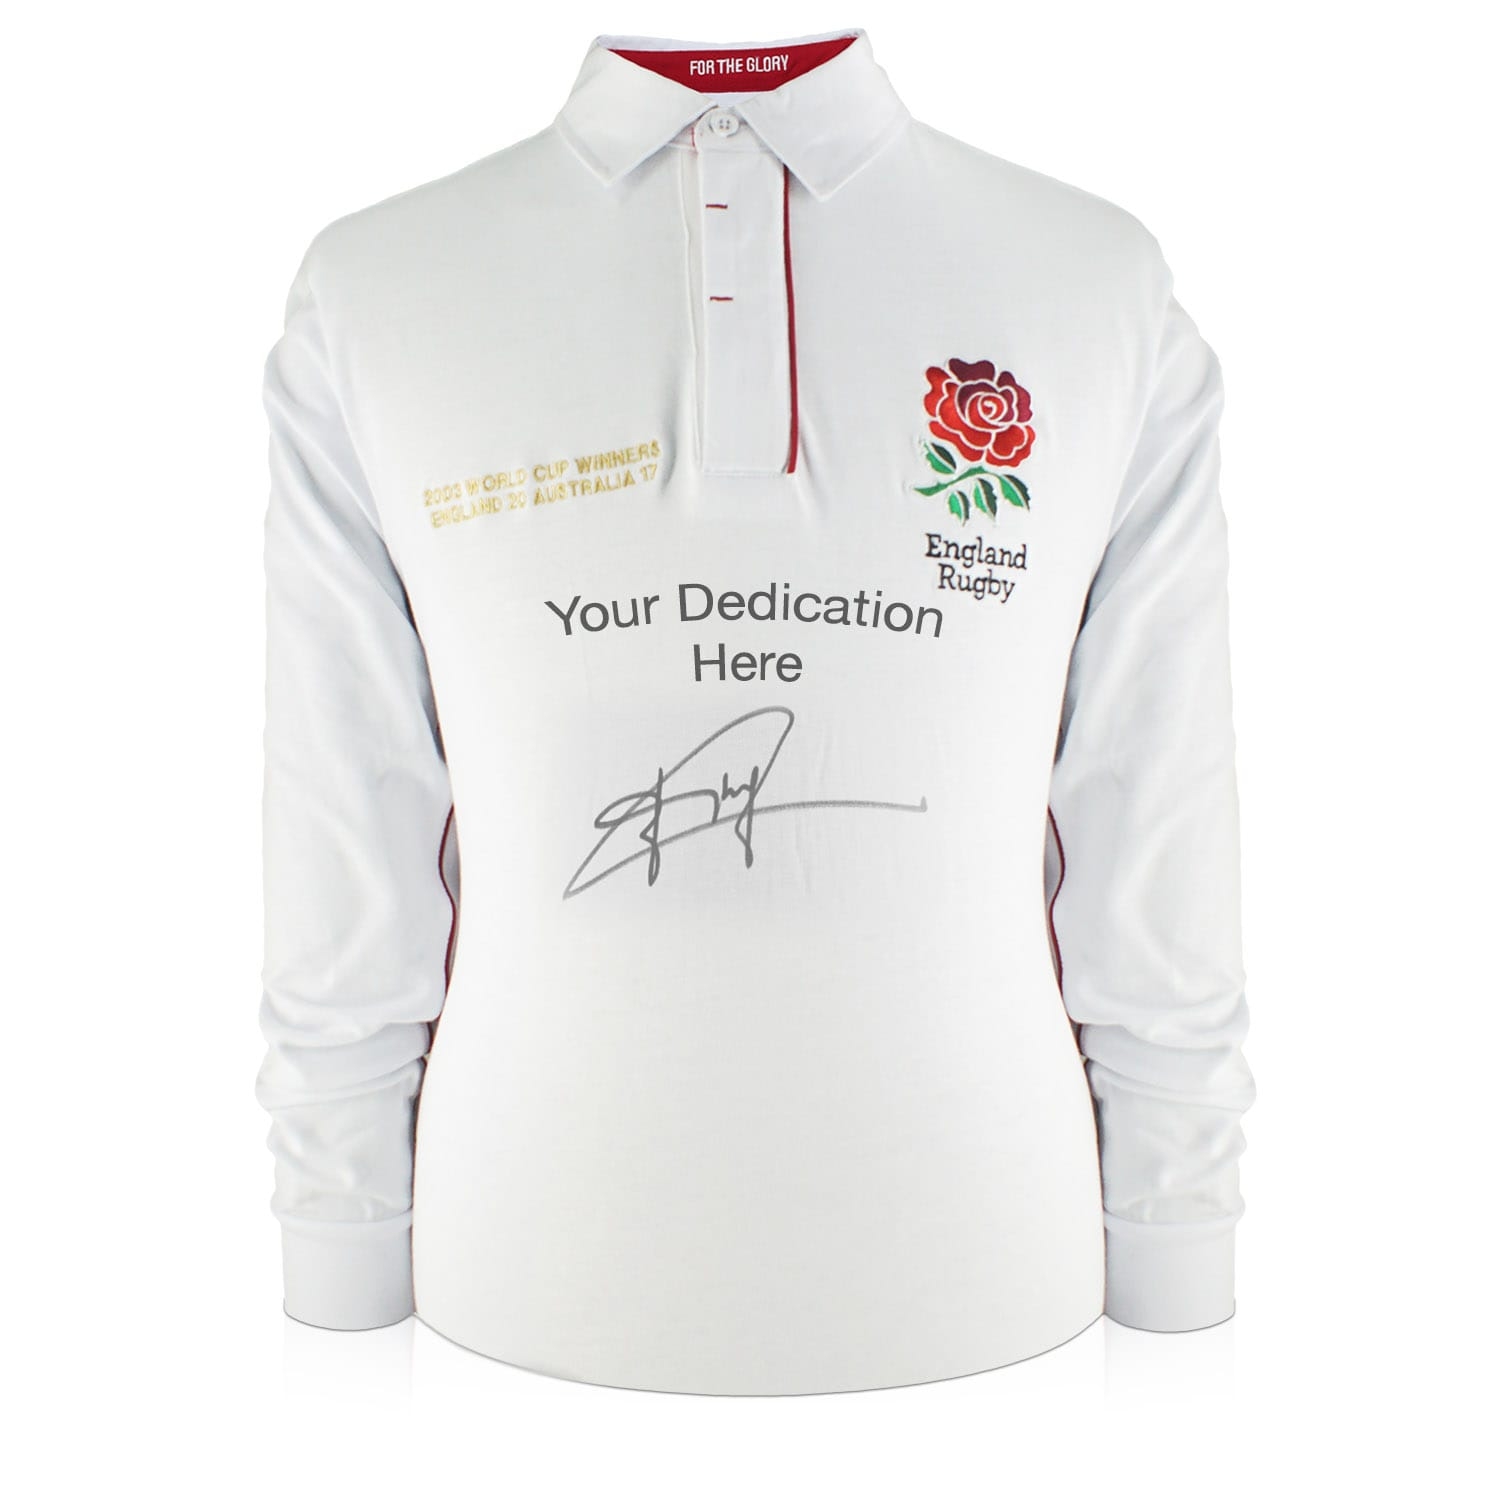 Jonny Wilkinson dedicated shirt 